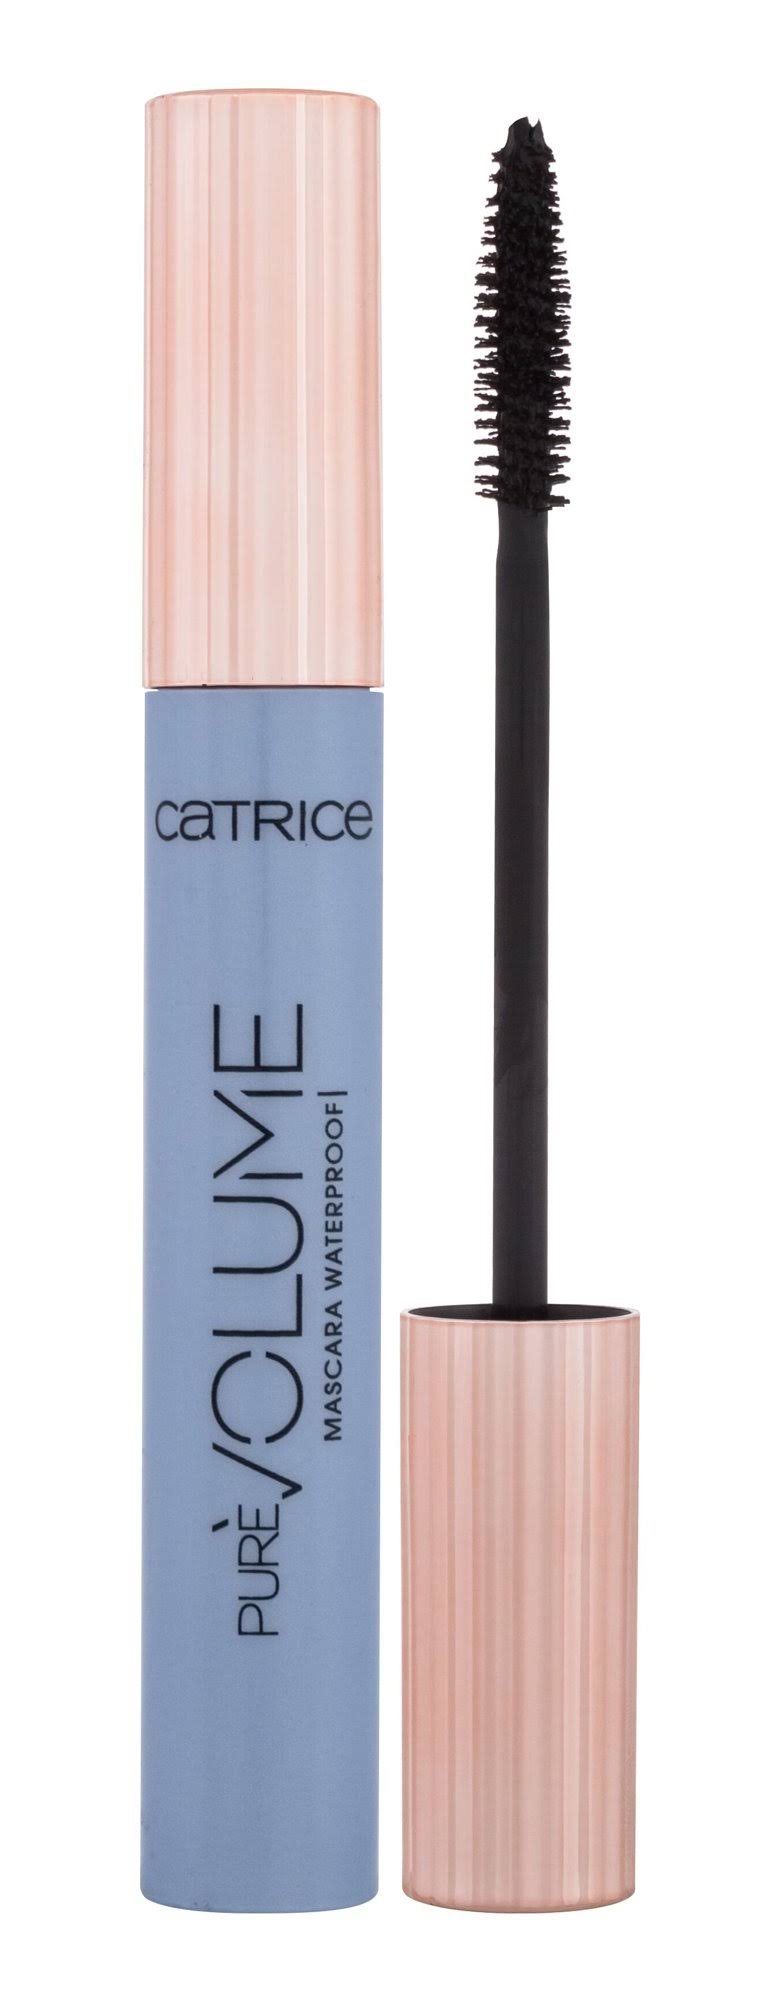 Catrice Pure Volume Waterproof Mascara Color Black 10ml